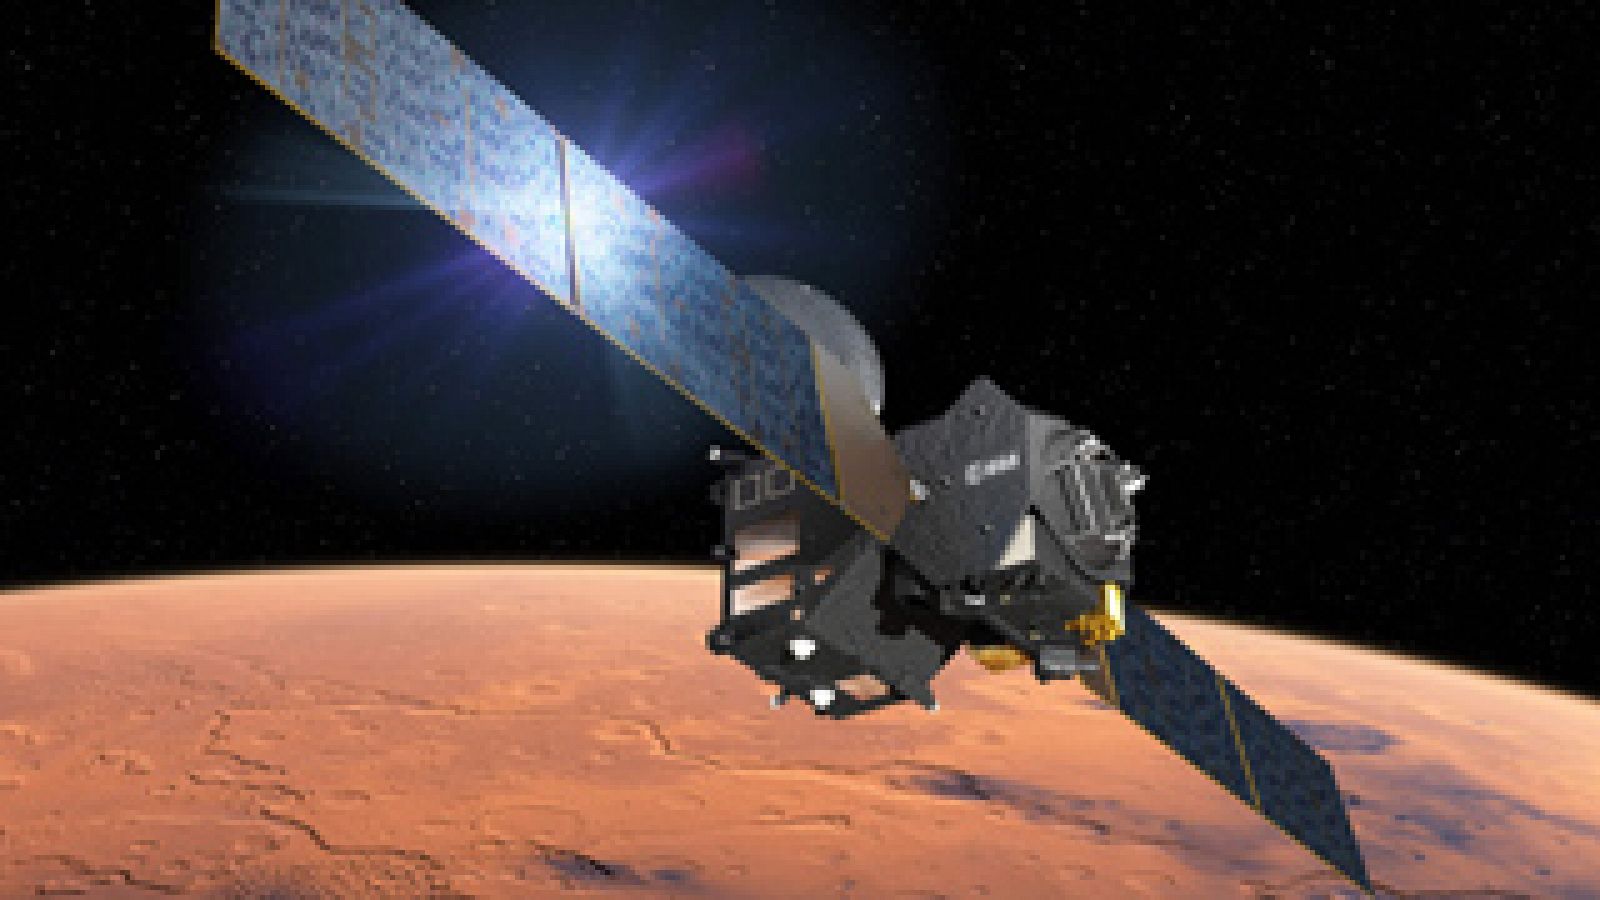 Telediario 1: La sonda TGO se inserta en la órbita de Marte pero aún no se confirma el aterrizaje del módulo Schiaparelli | RTVE Play